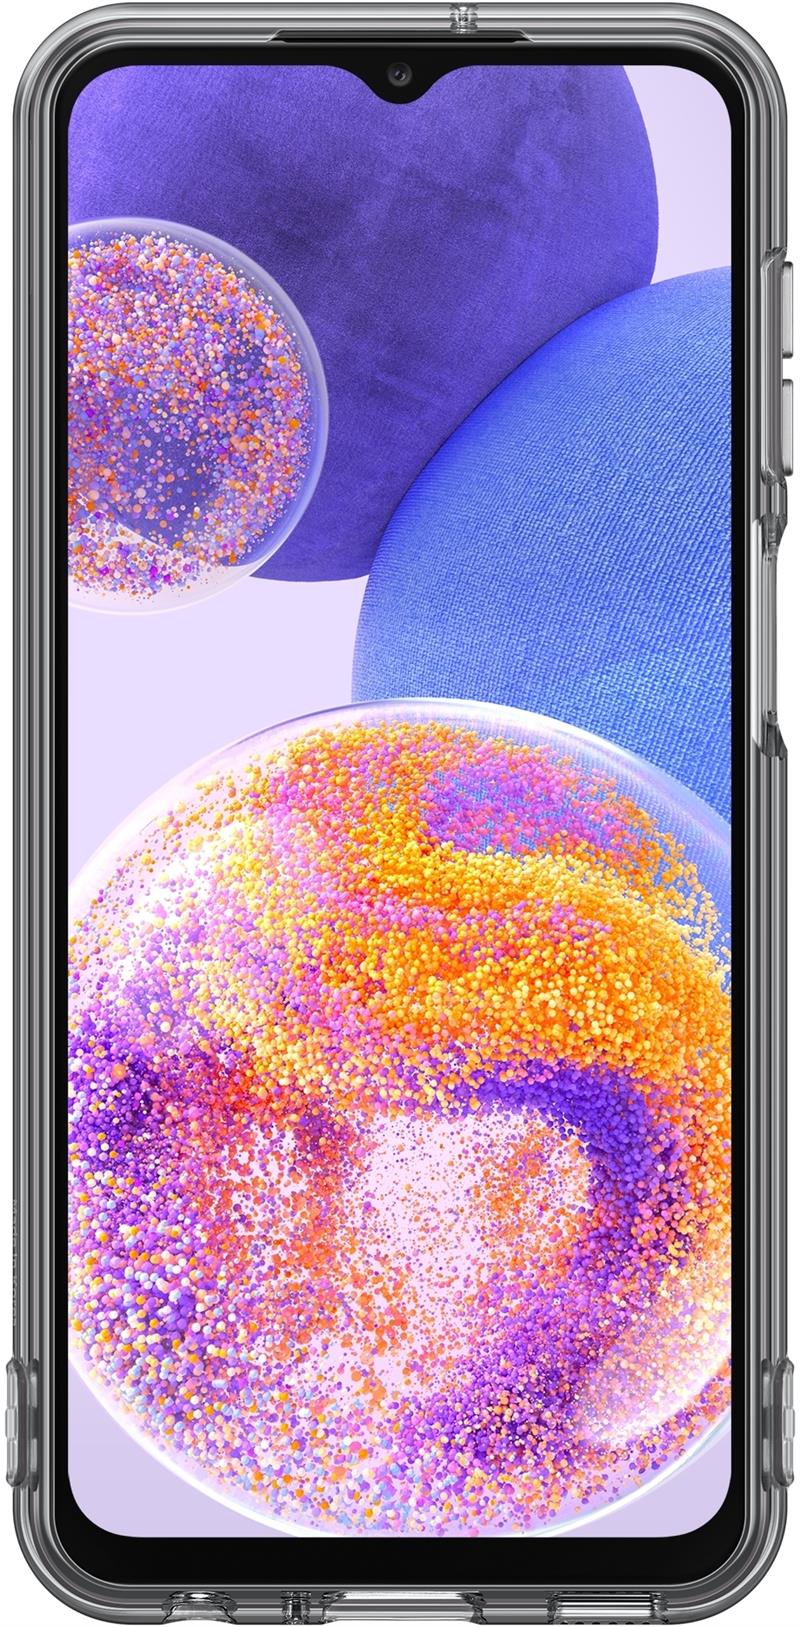  Samsung Soft Clear Cover Galaxy A23 5G Black